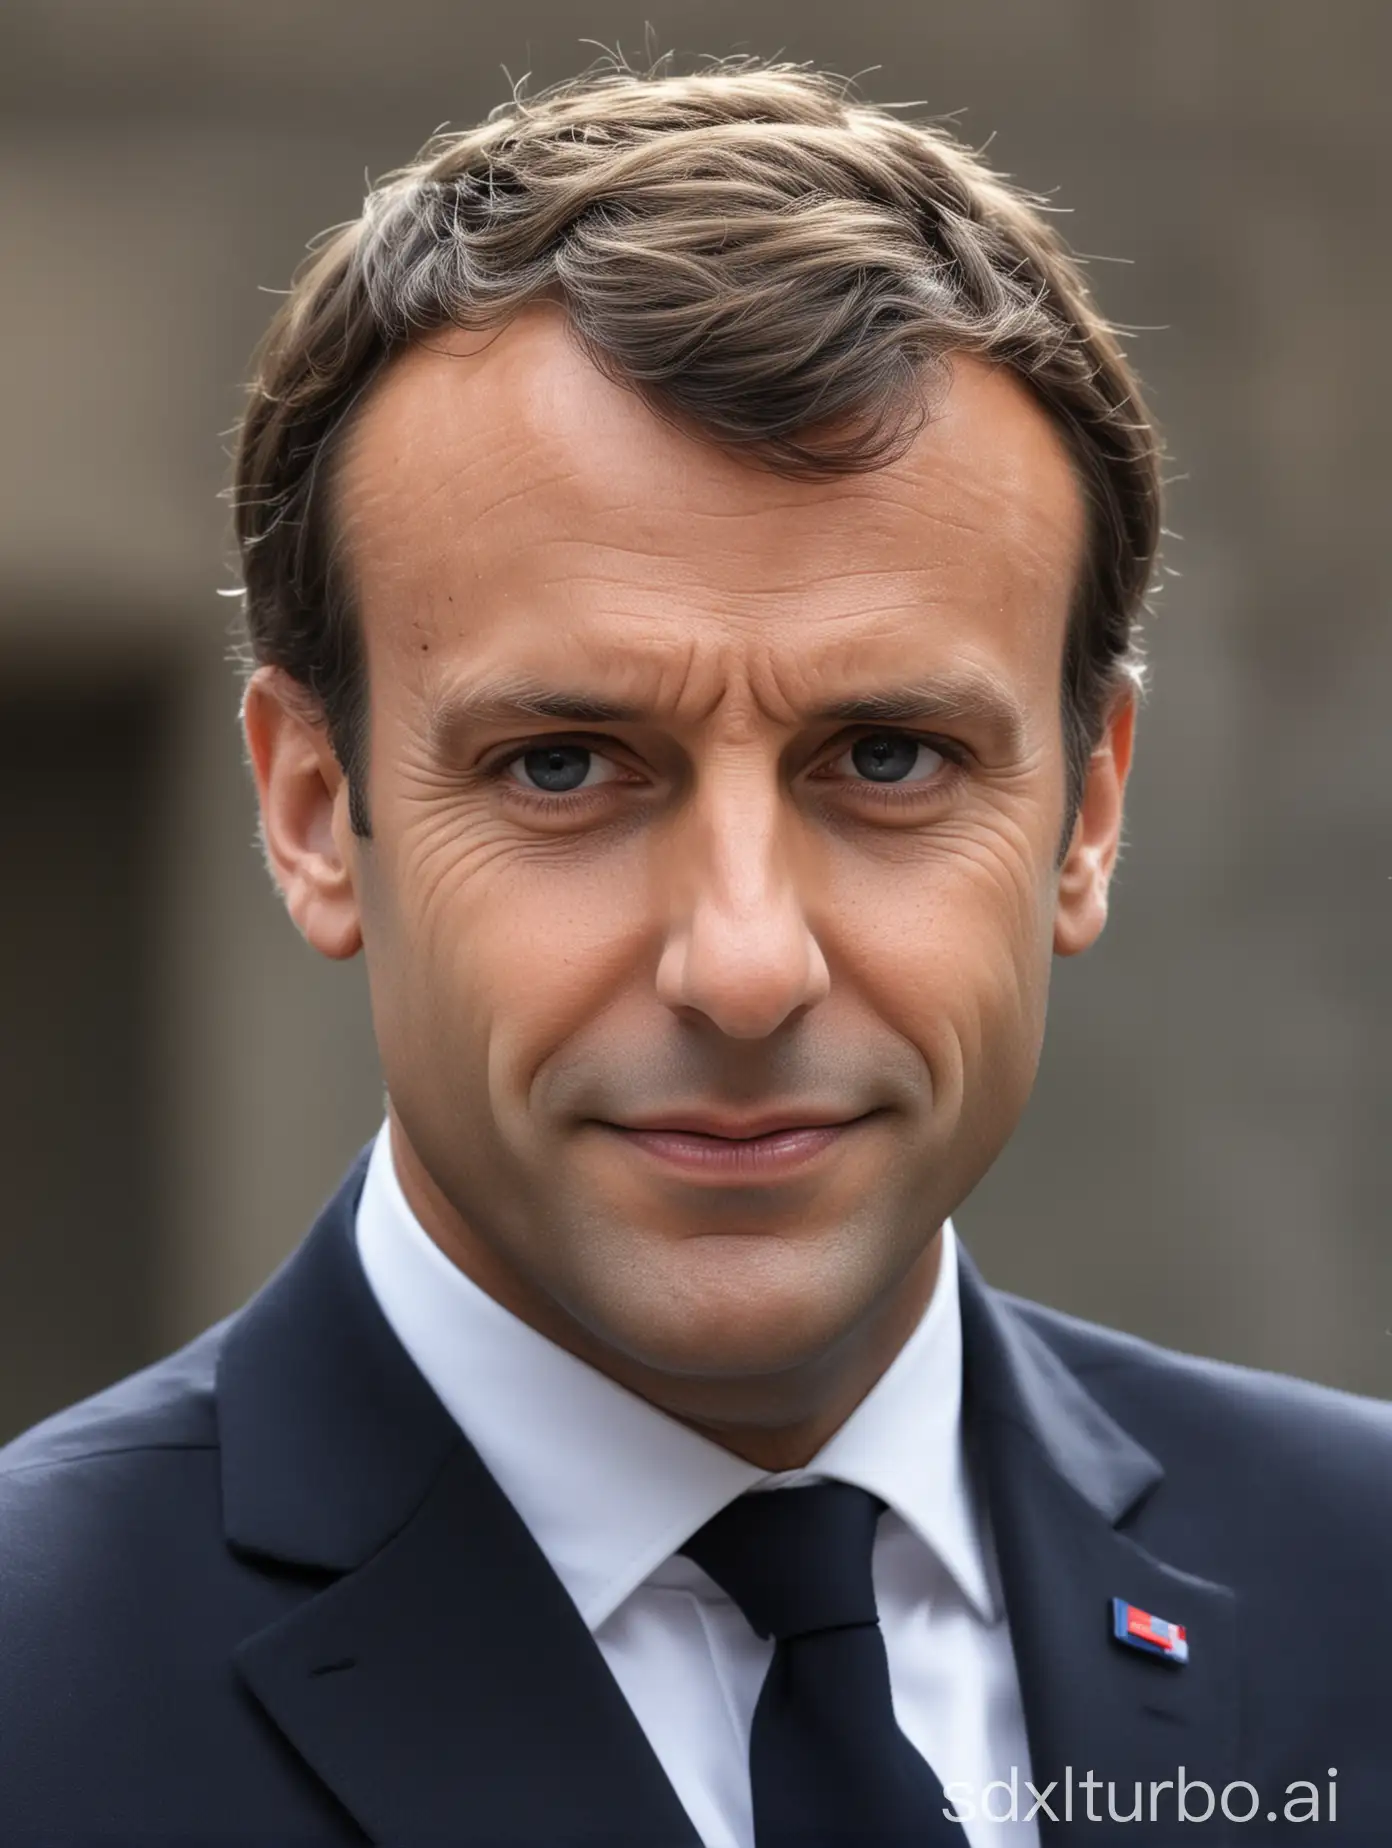 The french president Emmanuel Macron.